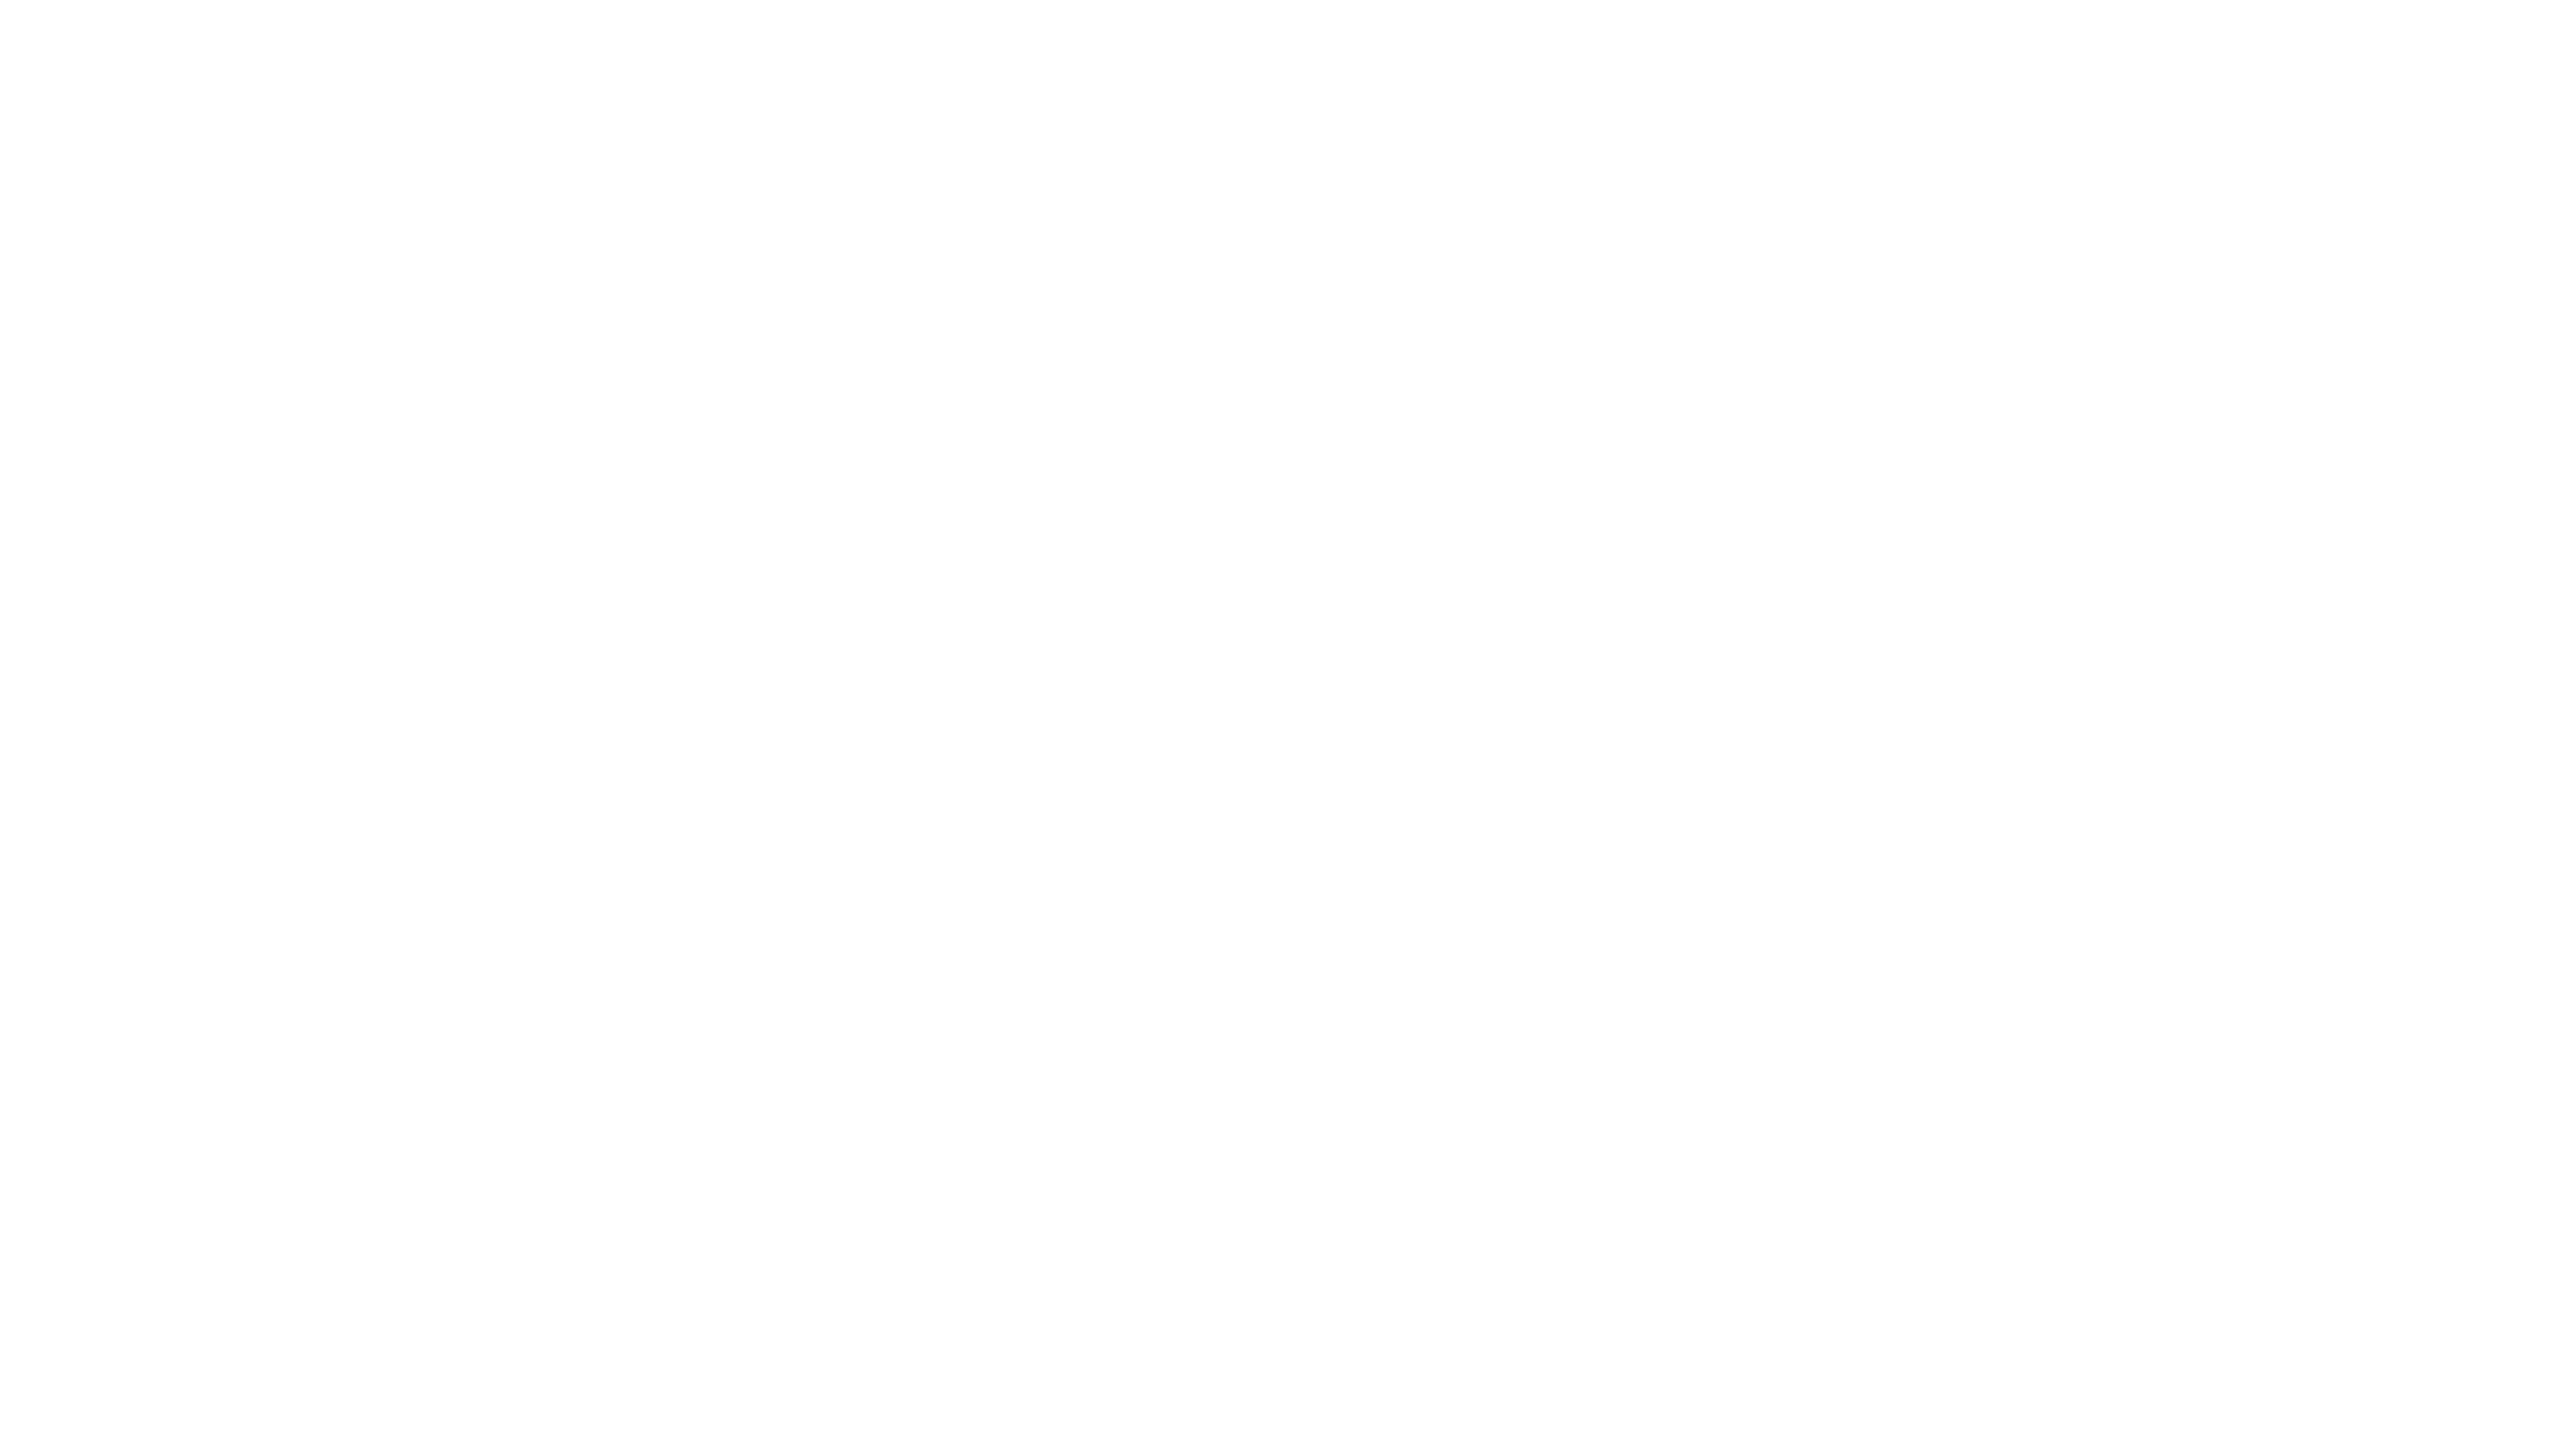 Grunwald 1710